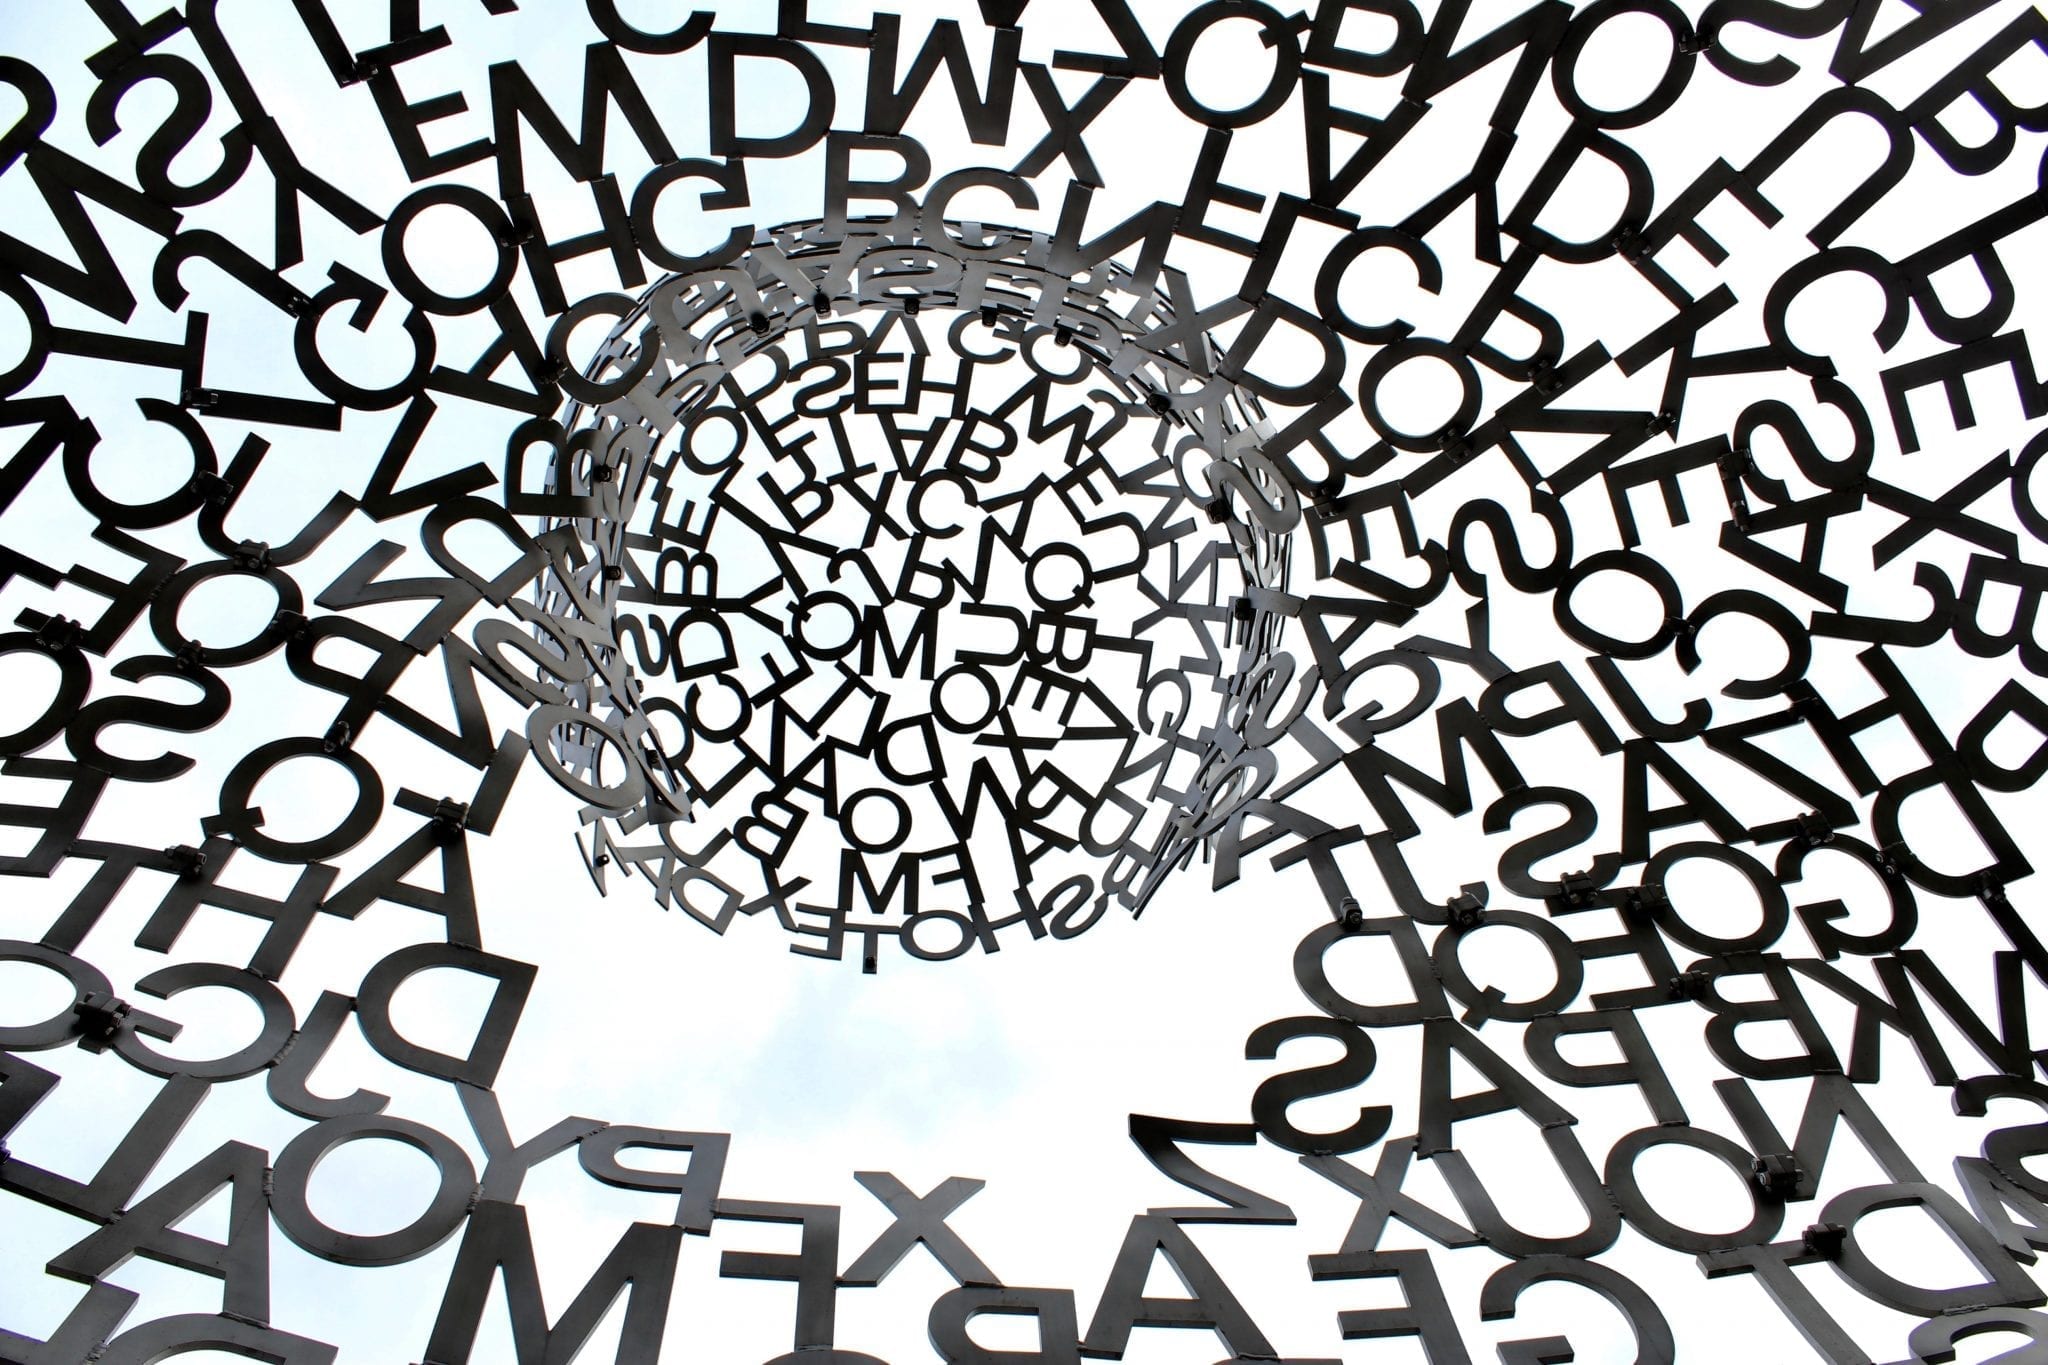 Black swirl of letters; image by Nathaniel Shuman, via Unsplash.com.